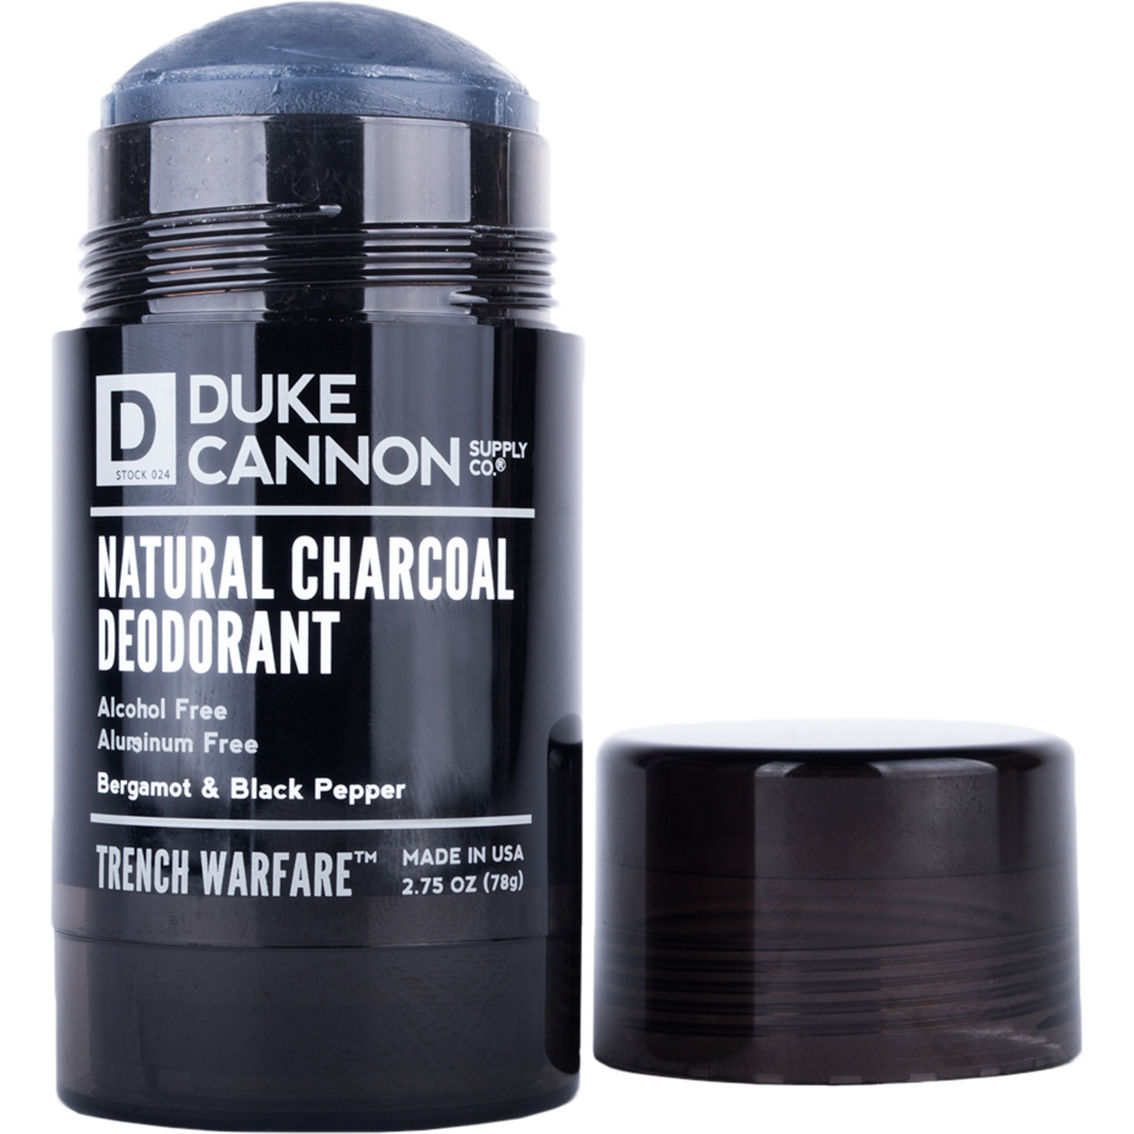 Duke Cannon Bergamot and Black Pepper Trench Warfare Natural Charcoal Deodorant - Image 1 of 3